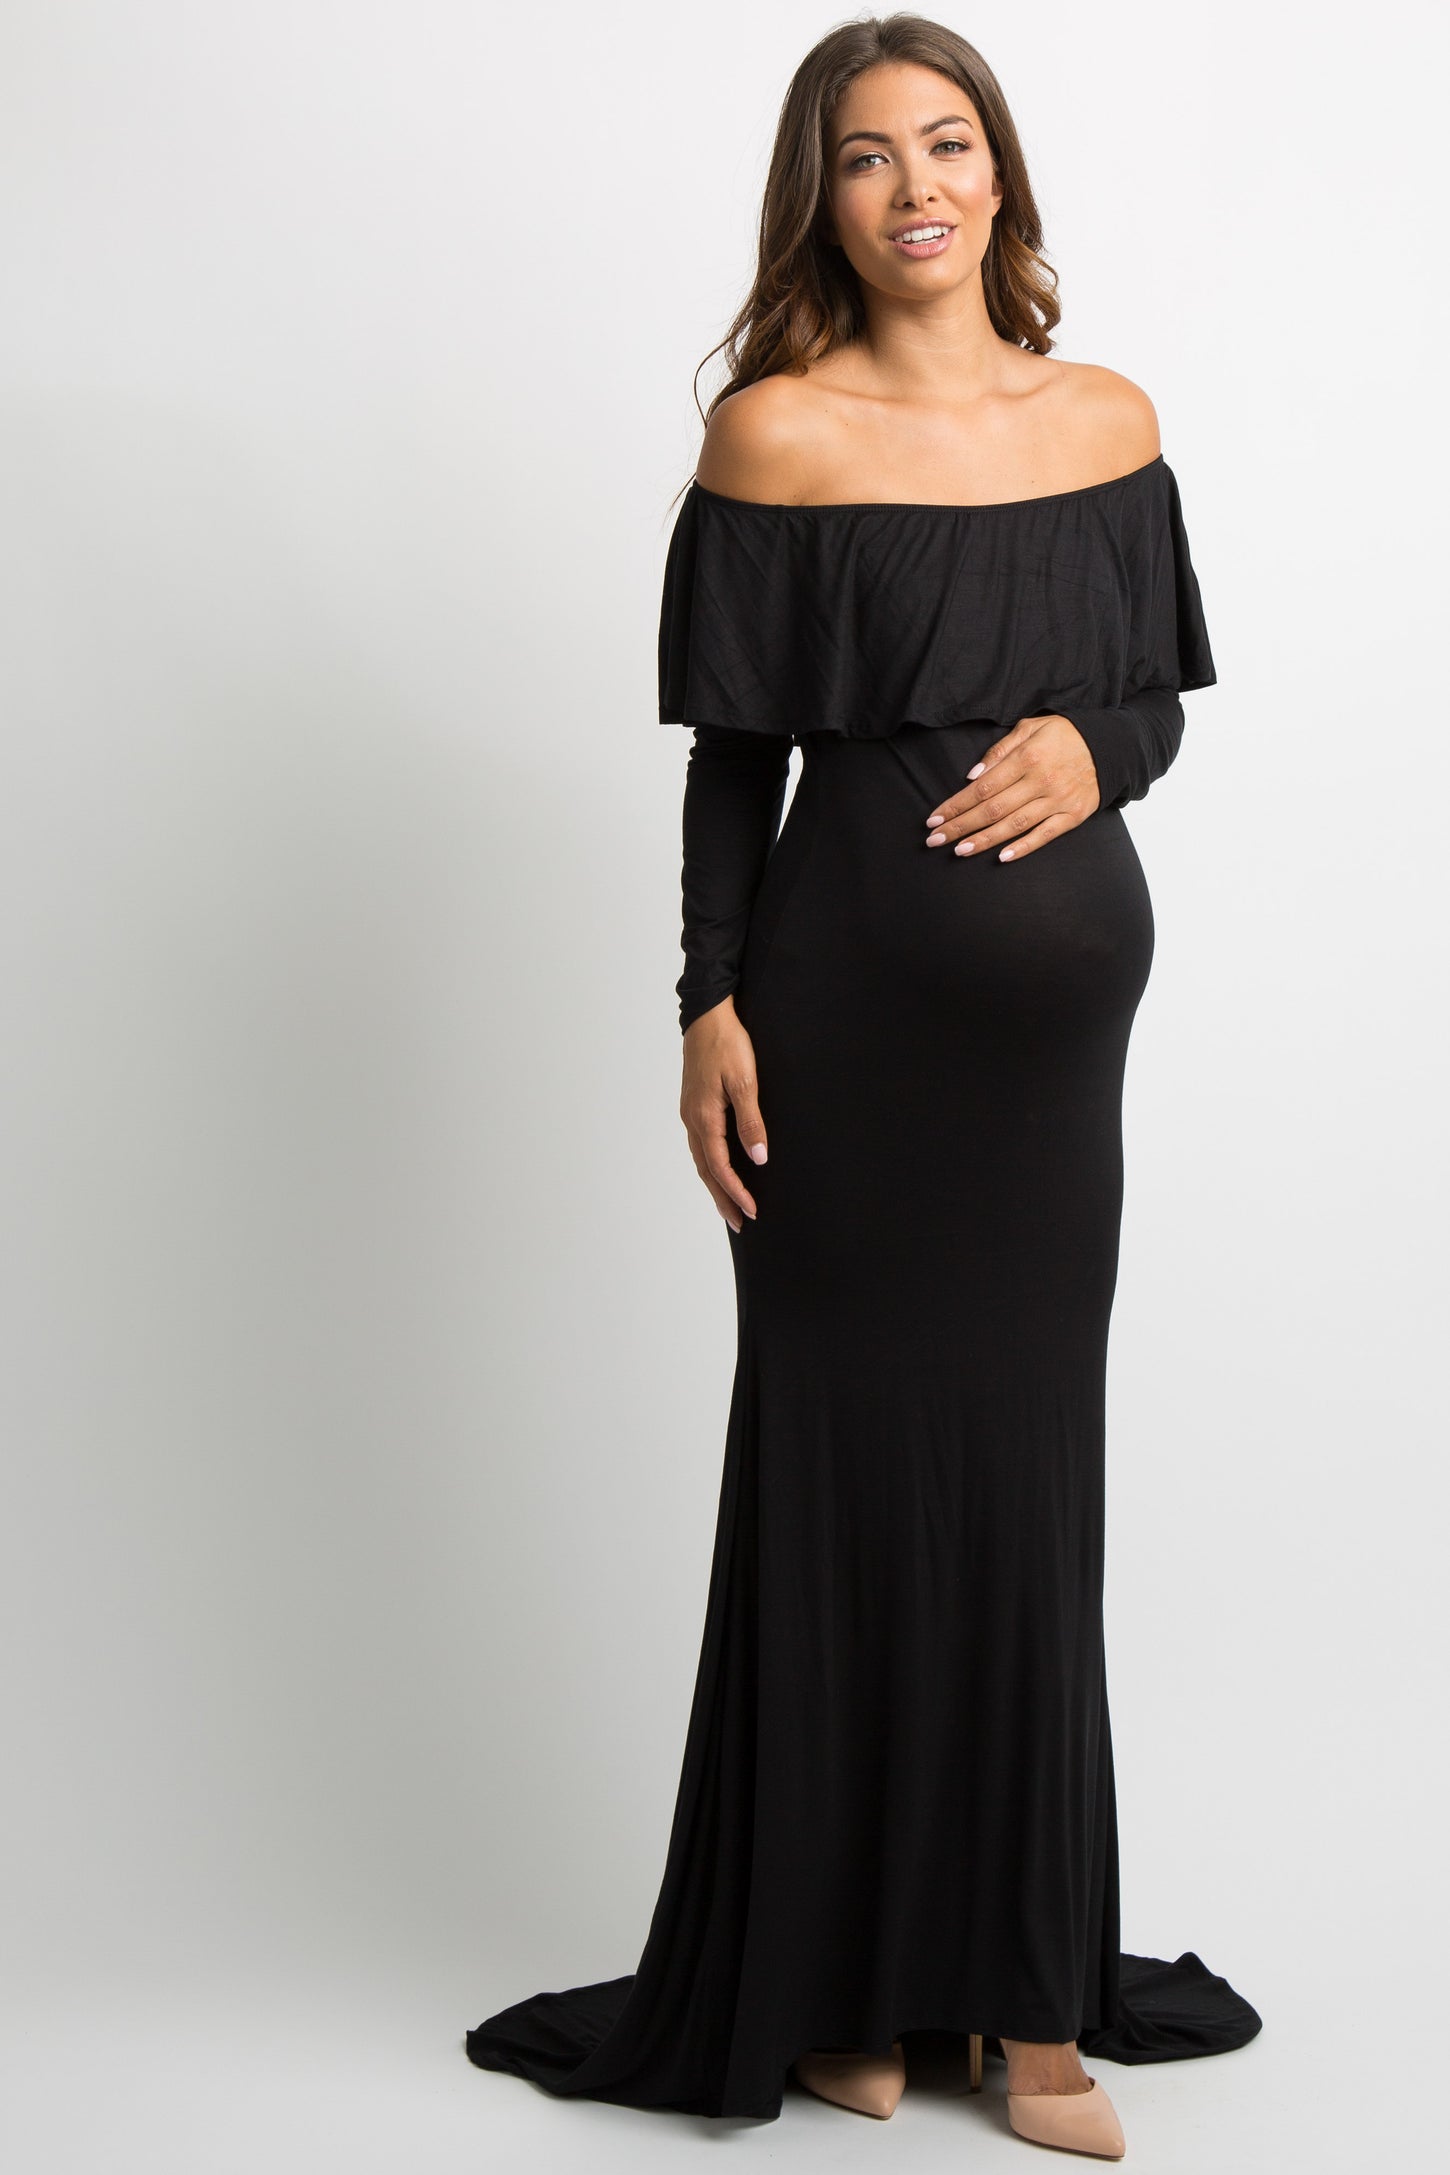 Black Off Shoulder Ruffle Maternity Photoshoot Gown/Dress– PinkBlush